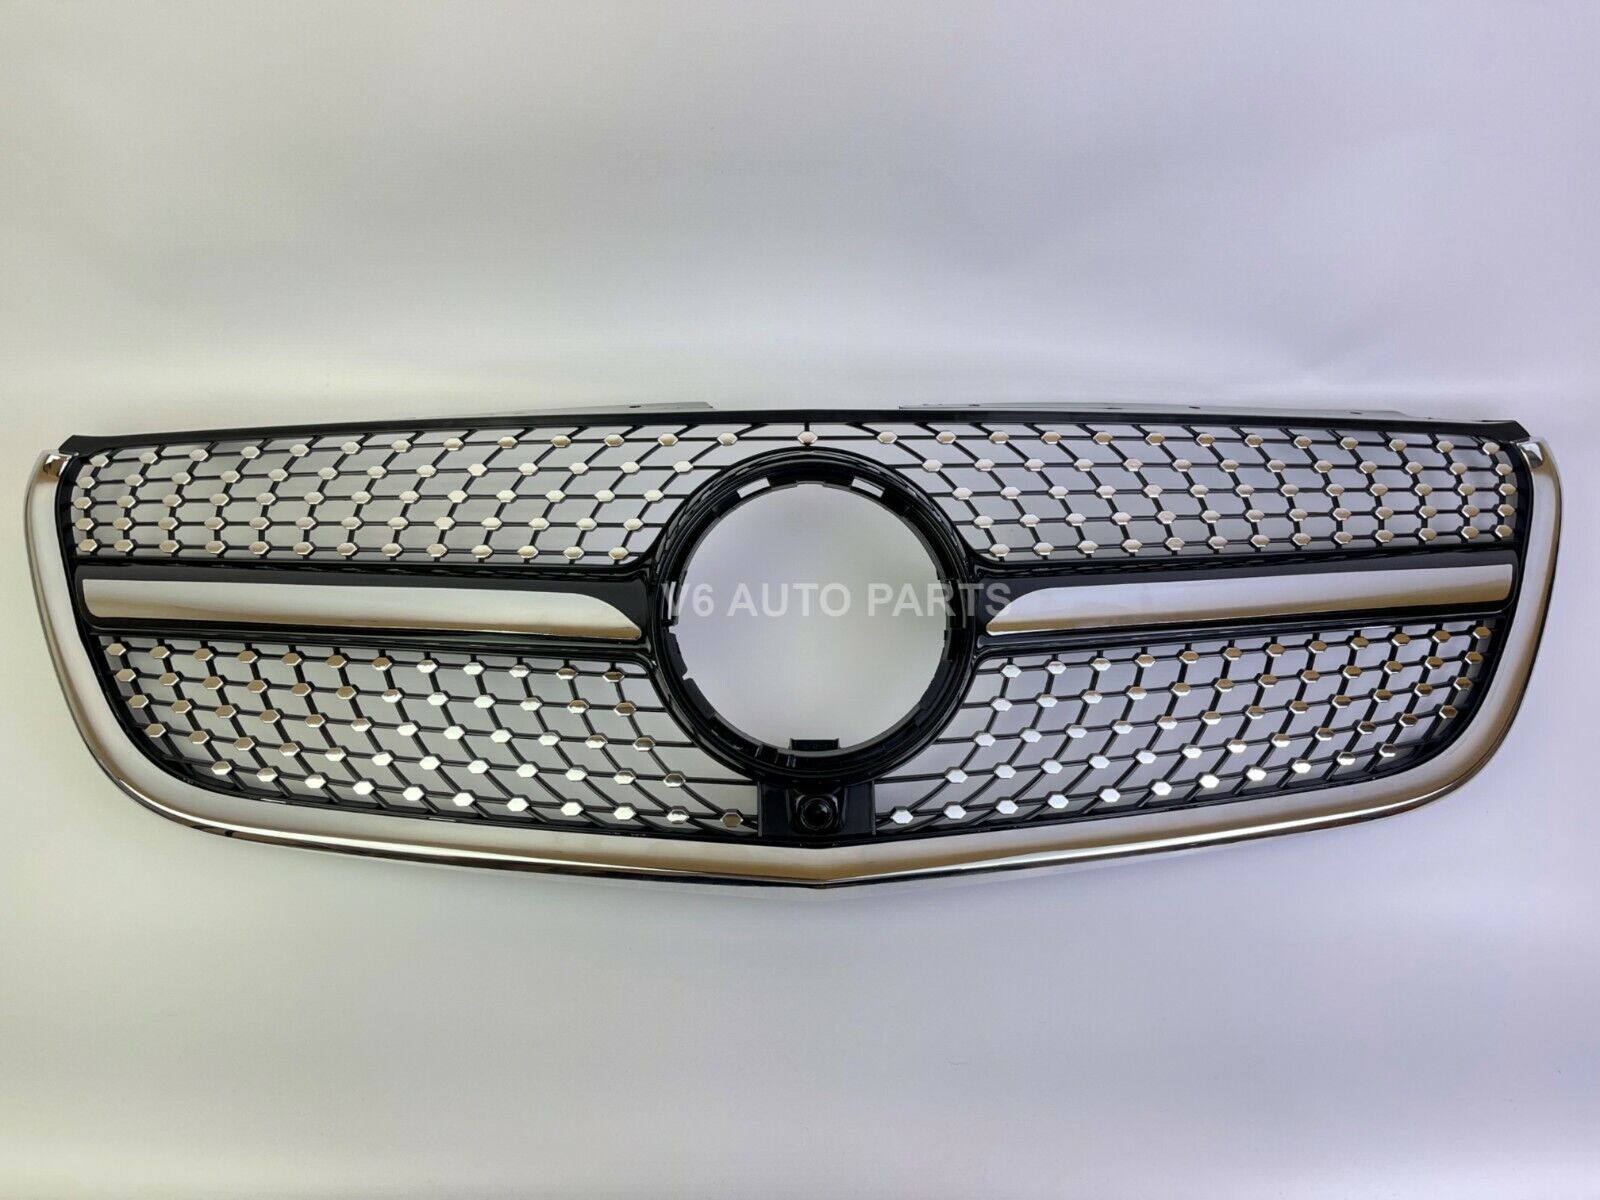 For Mercedes Vito Taxi W447 111 CDI Front Grille Radiator Black Diamond 2014-22